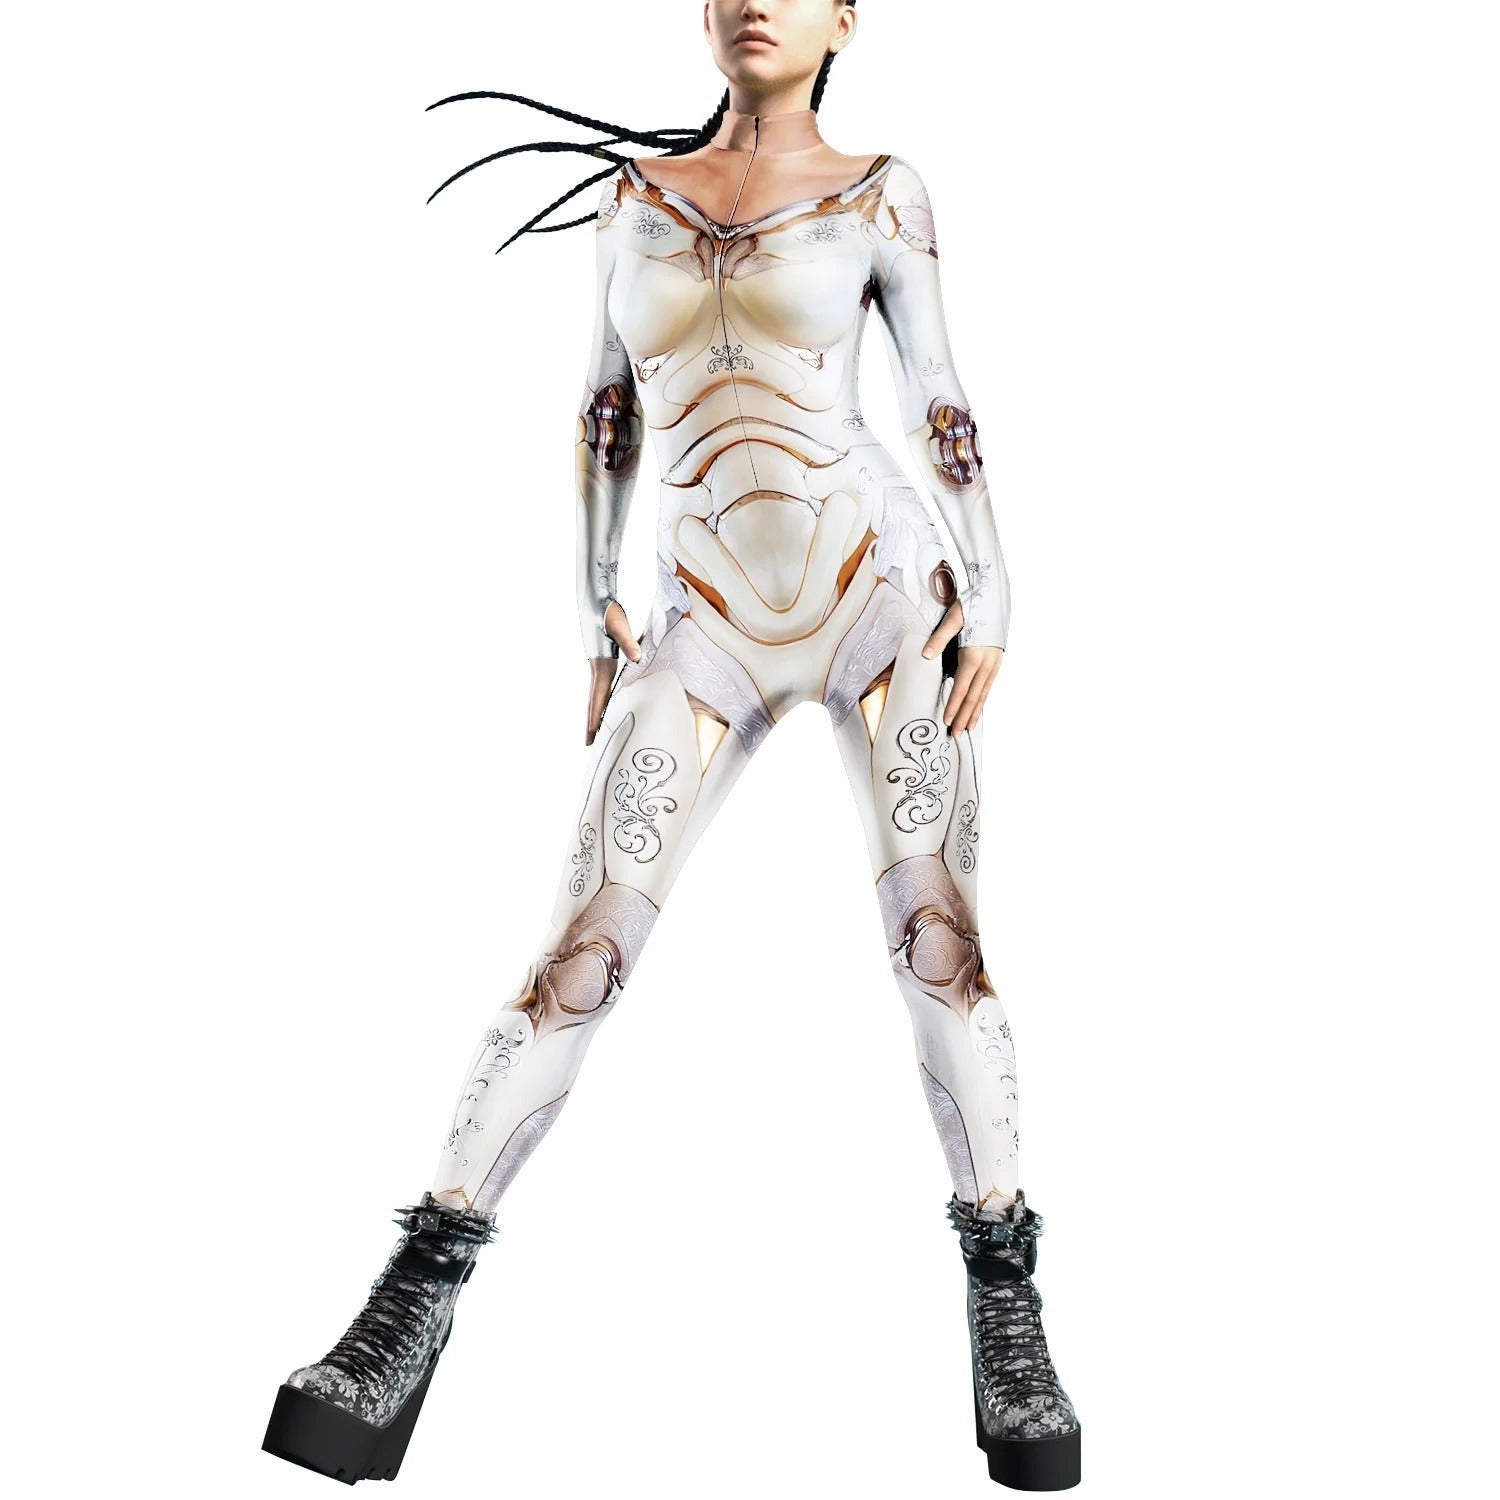 Ultra-Modern Metallic Bodysuit - Futuristic Fashion Statement